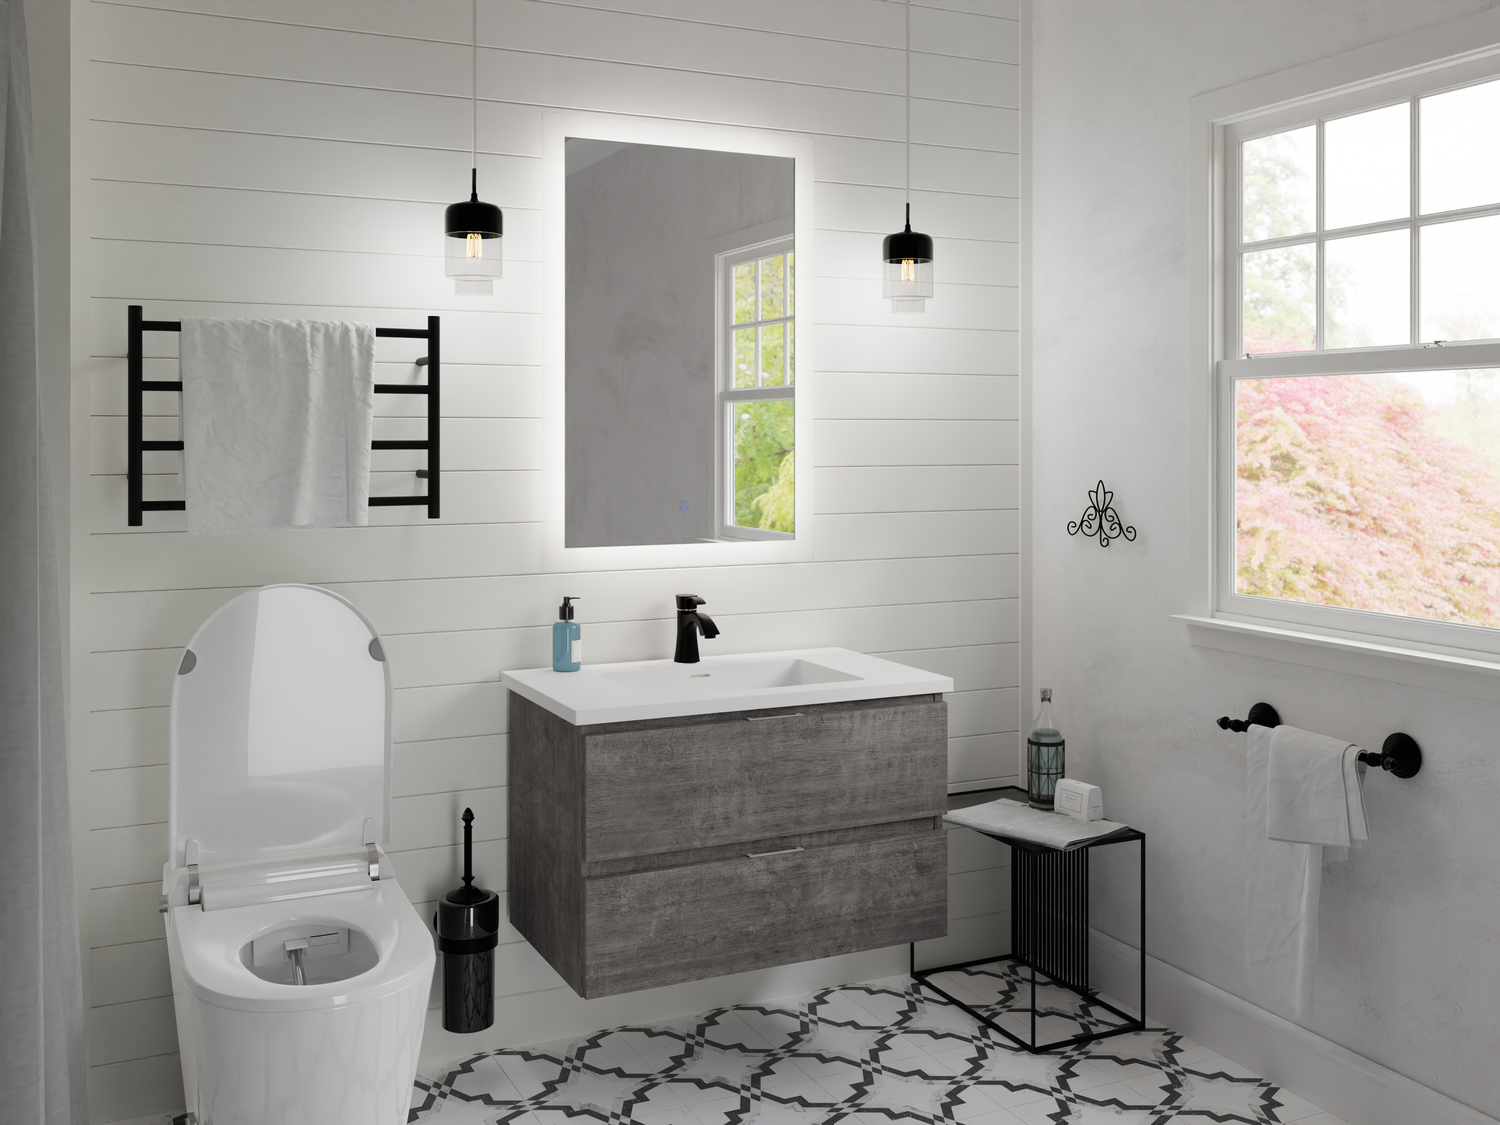 best wood for bathroom vanity Anzzi BATHROOM - Vanities - Vanity Sets Gray